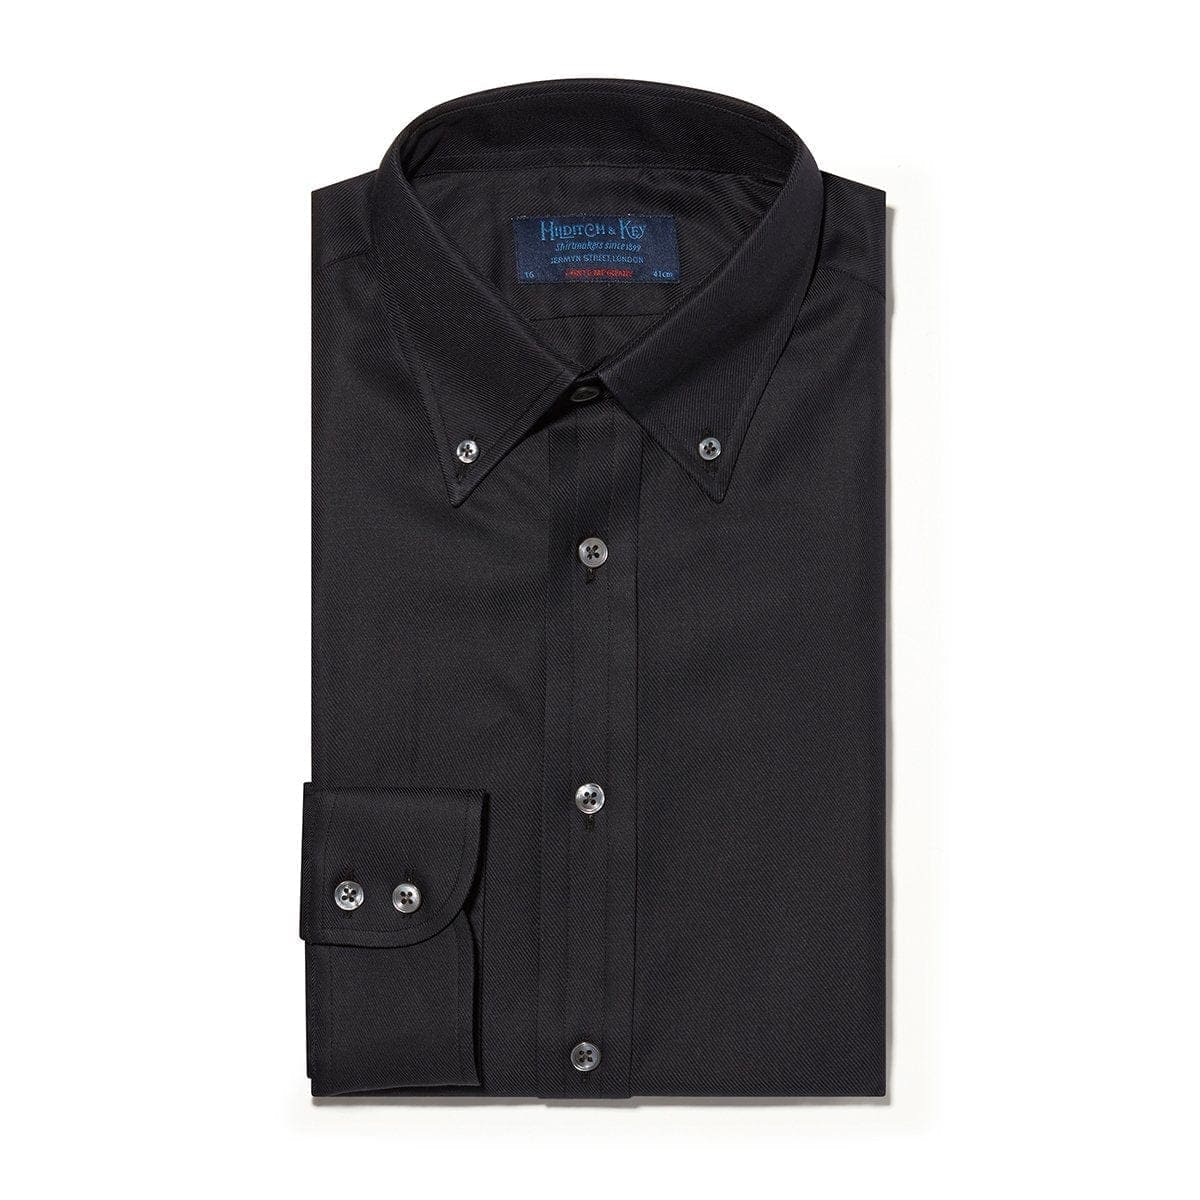 Contemporary Fit, Button Down Collar, 2 Button Cuff Shirt In Plain Black Twill